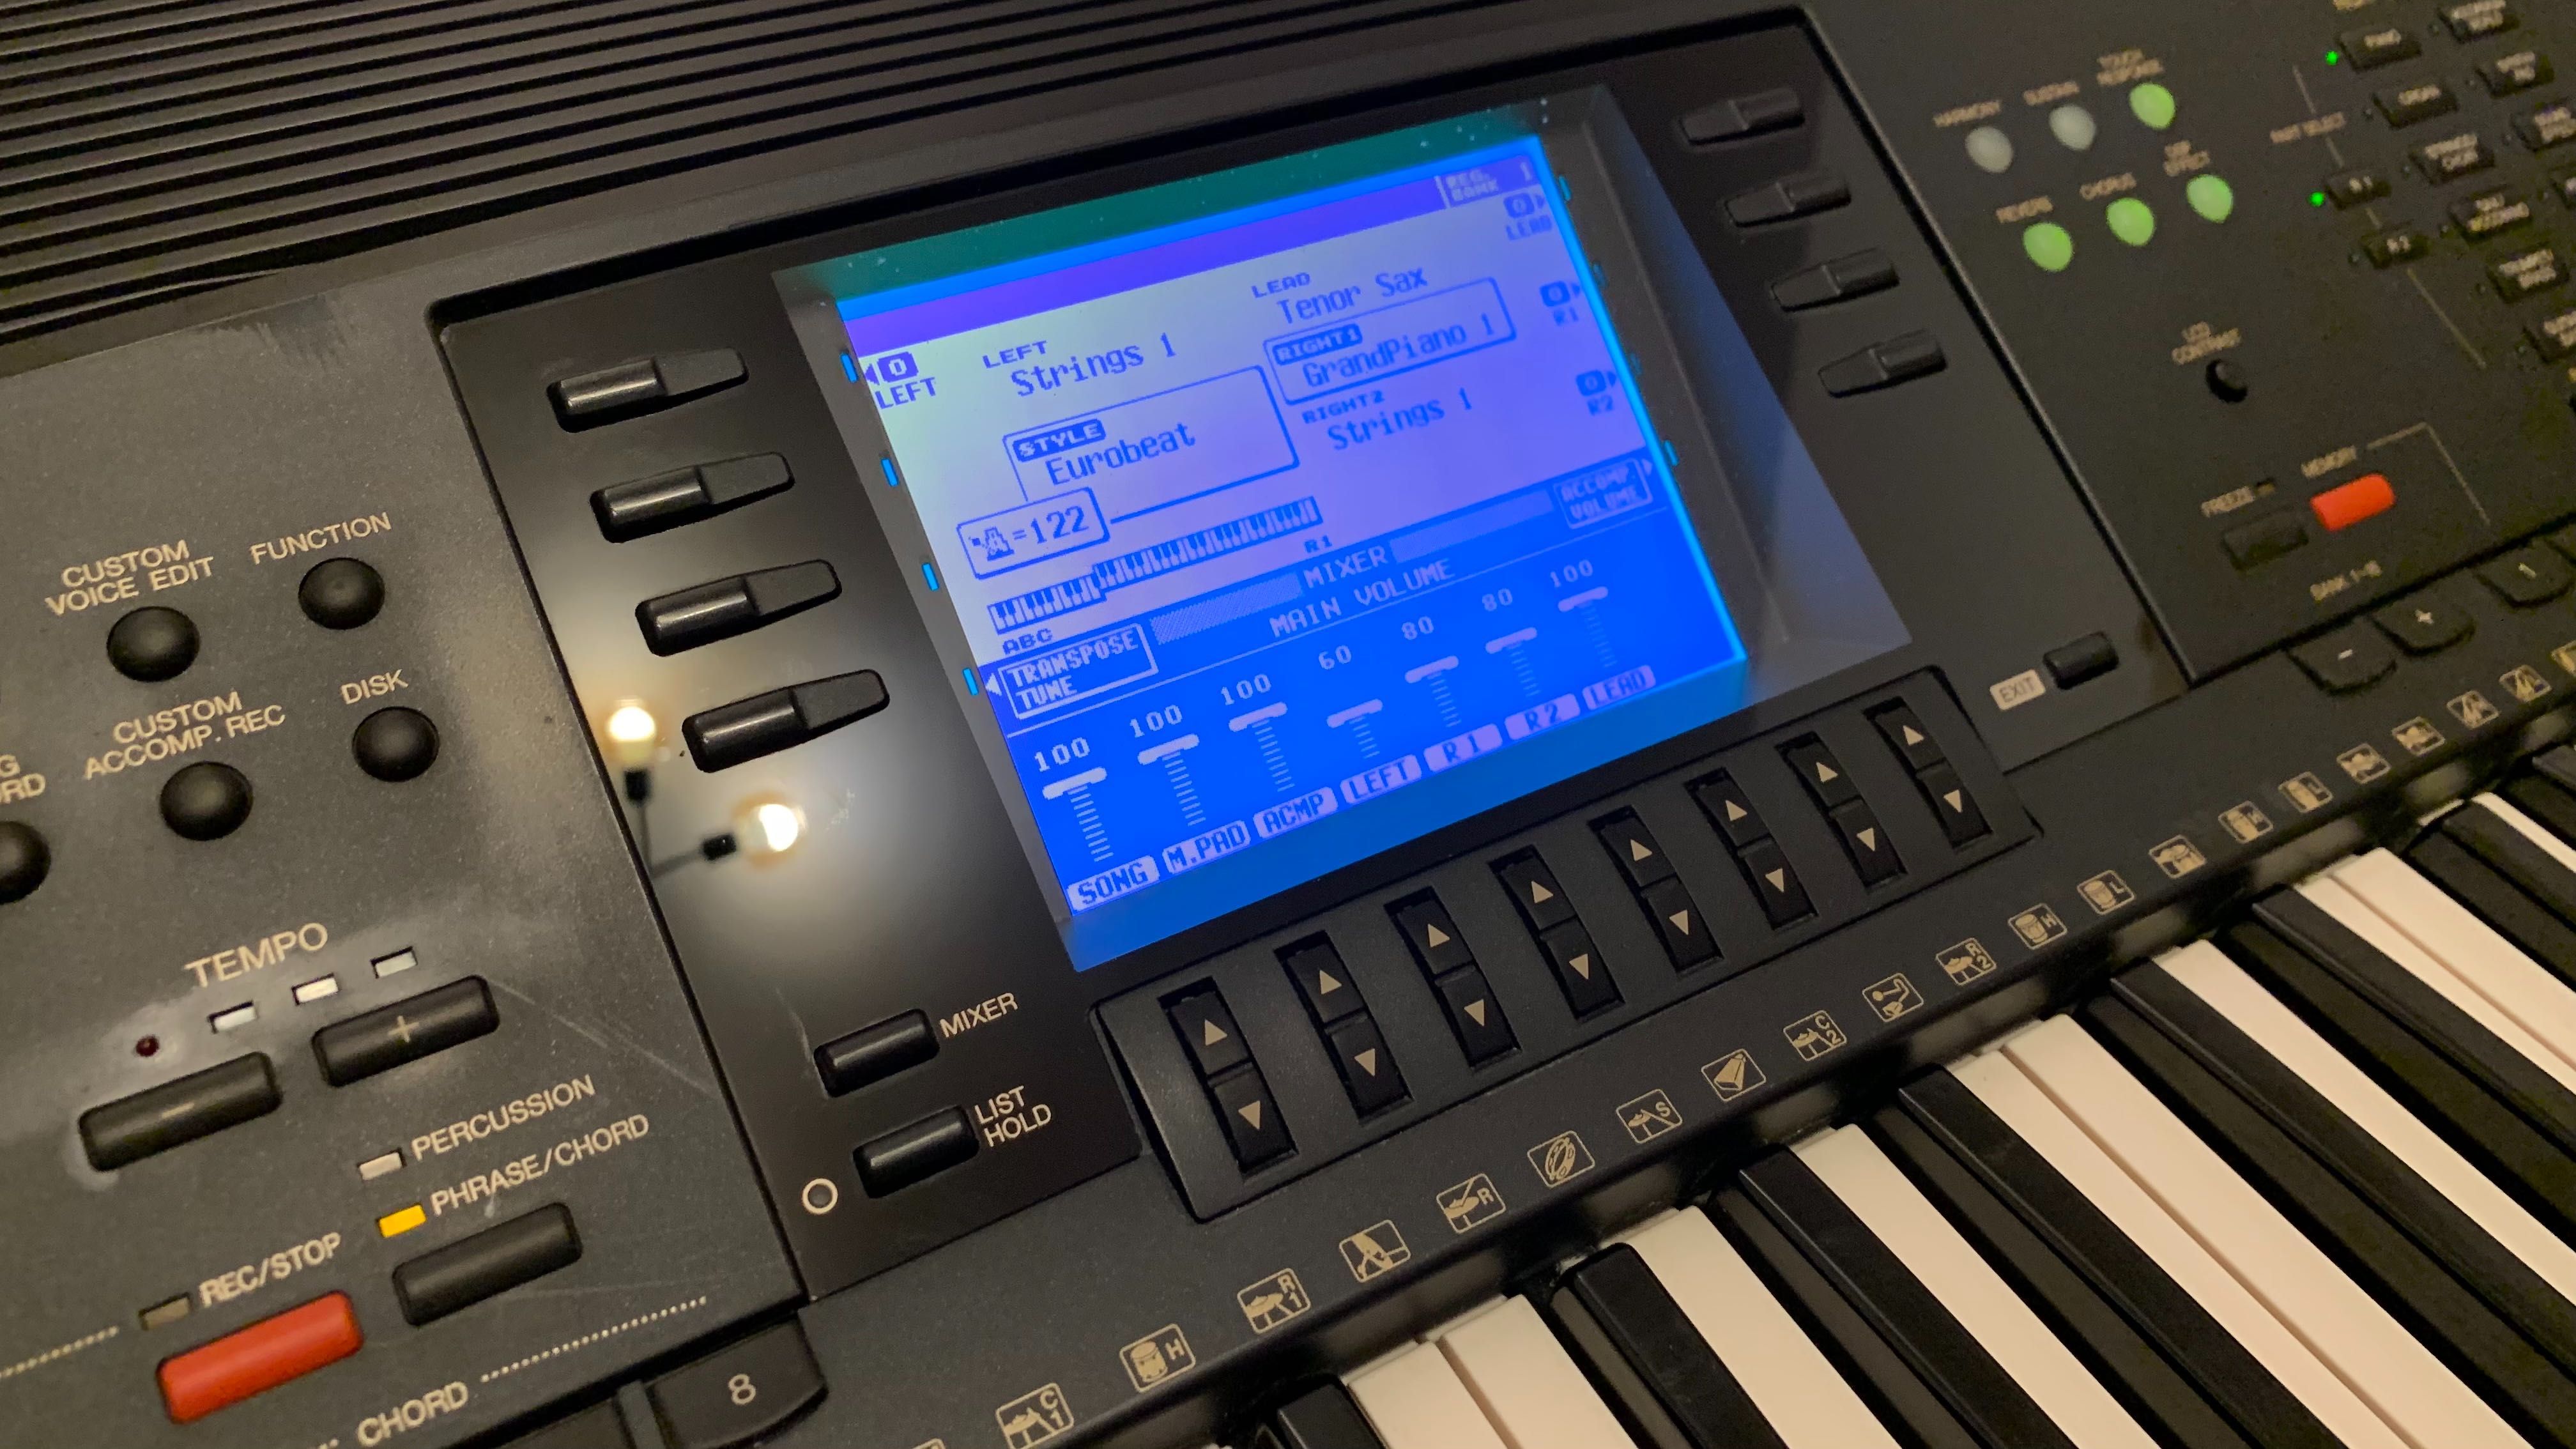 Yamaha PSR-4000 orga Profesionala claviatura sunet portatone midi